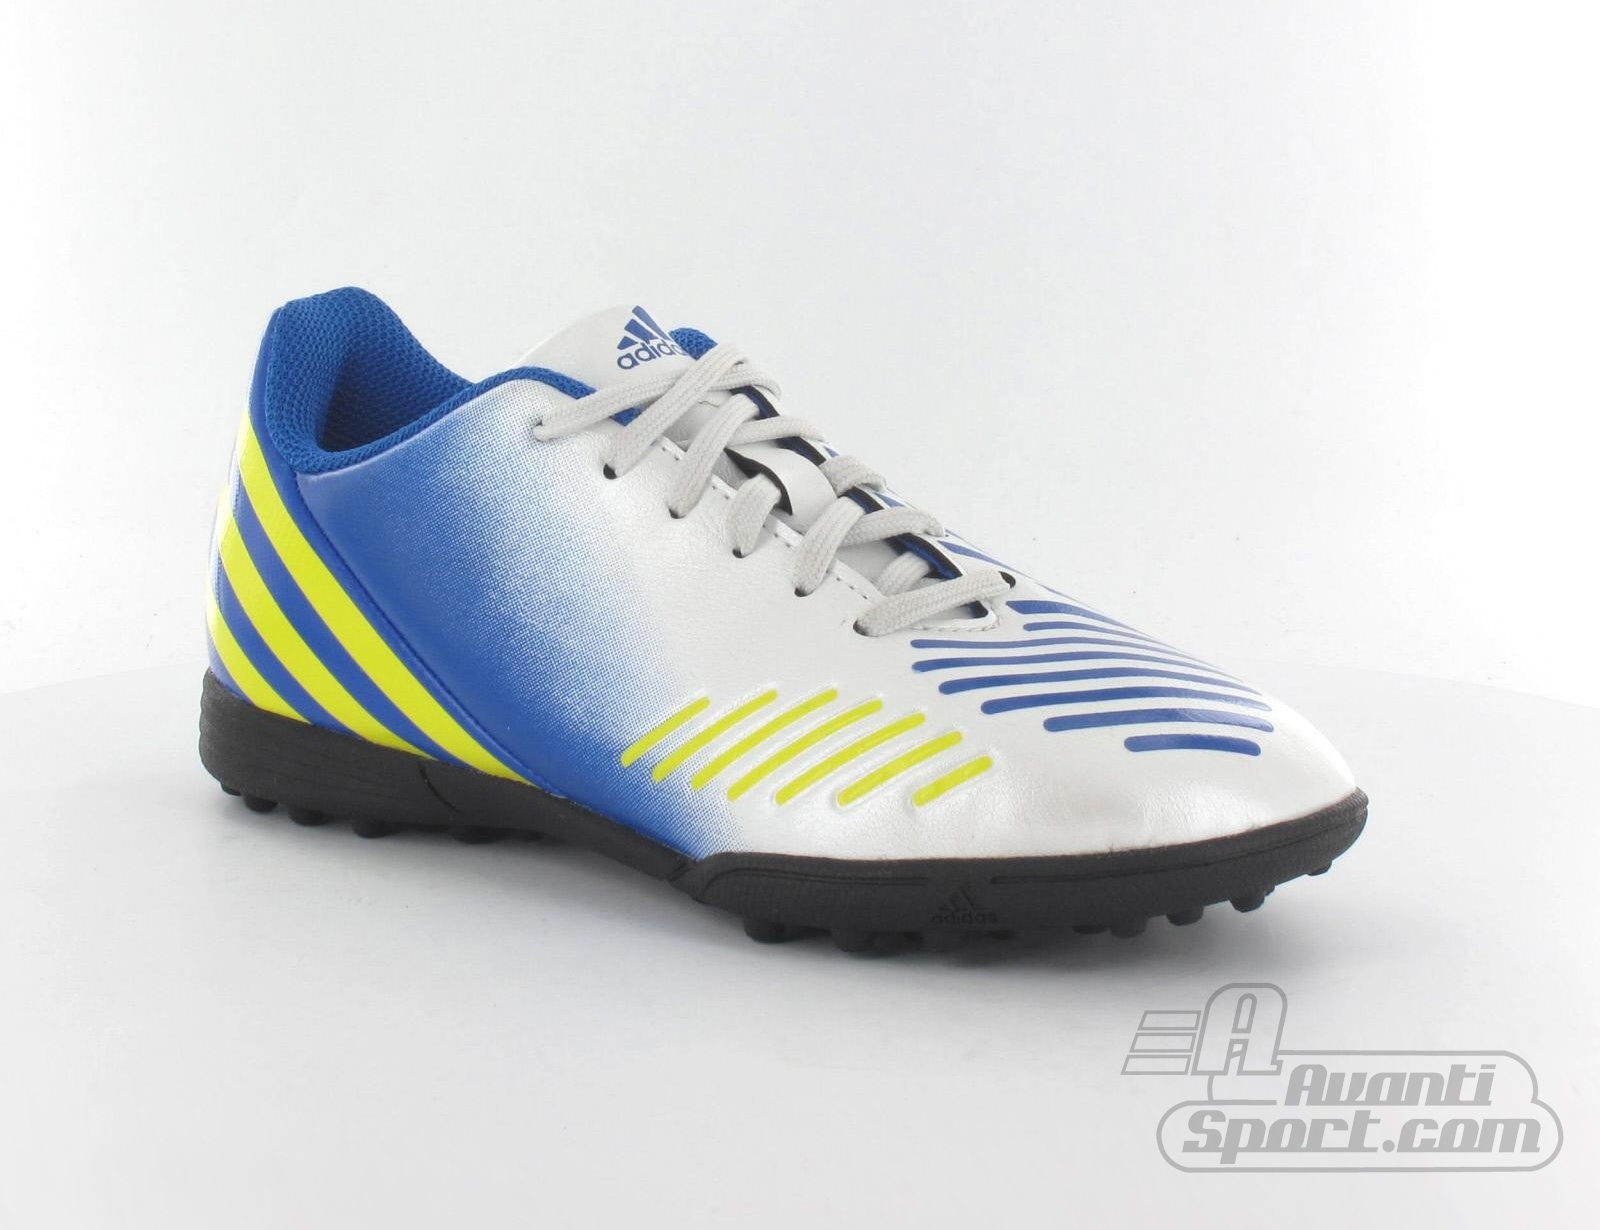 Avantisport - Adidas - Predito Lz Trx Tf Junior - Adidas Voetbalschoenen